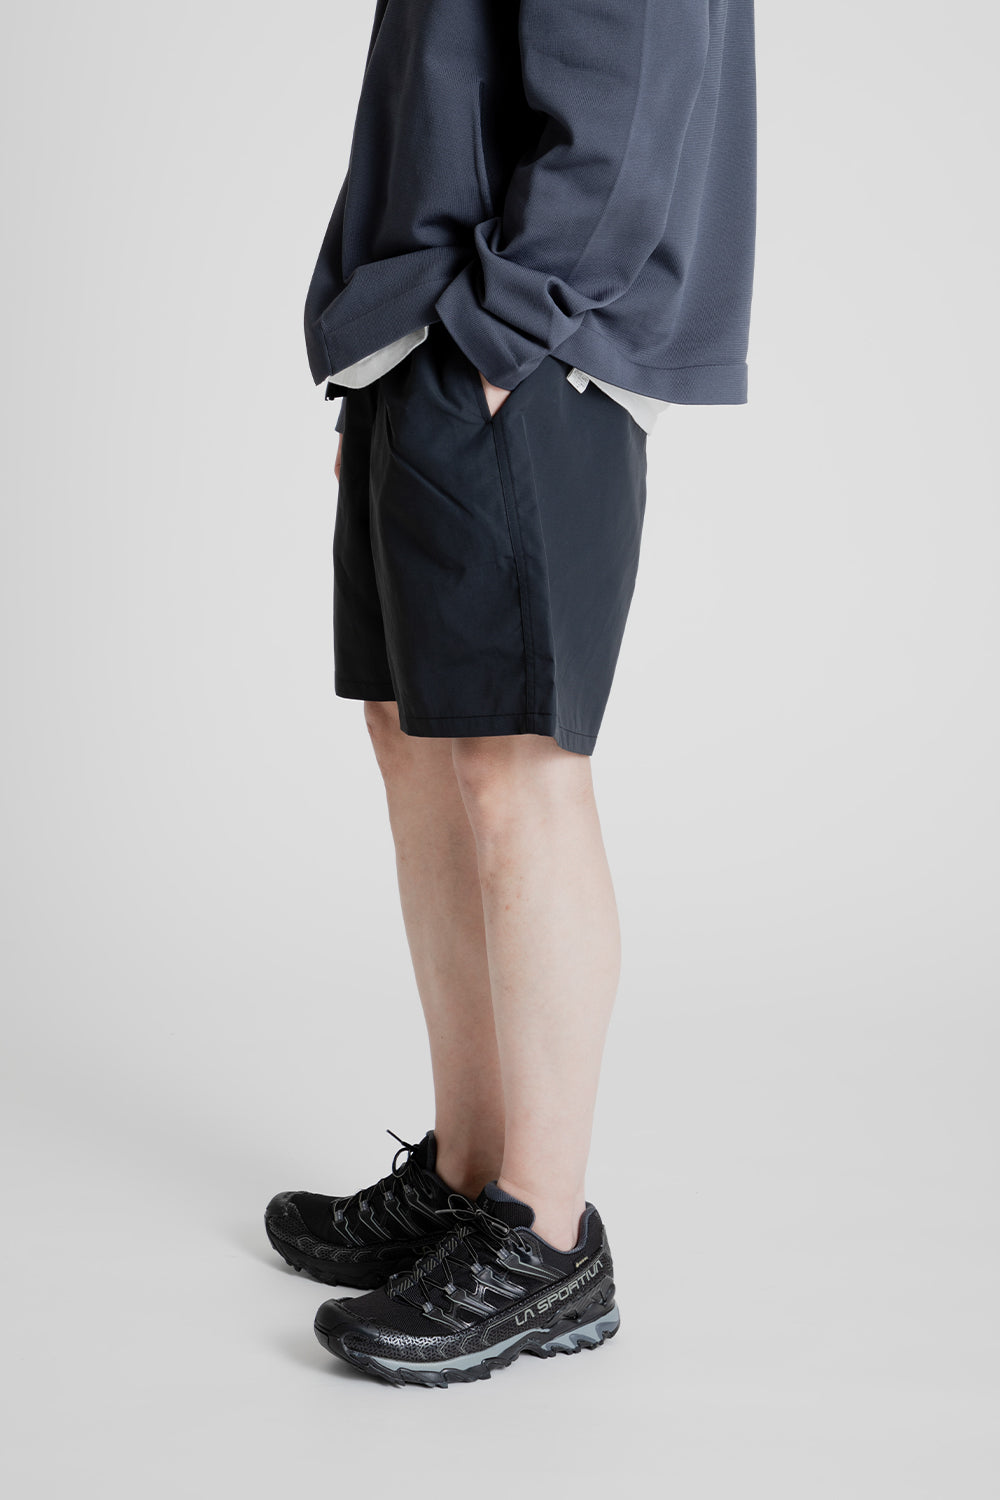 Goldwin Nylon Shorts 7 inch in Black